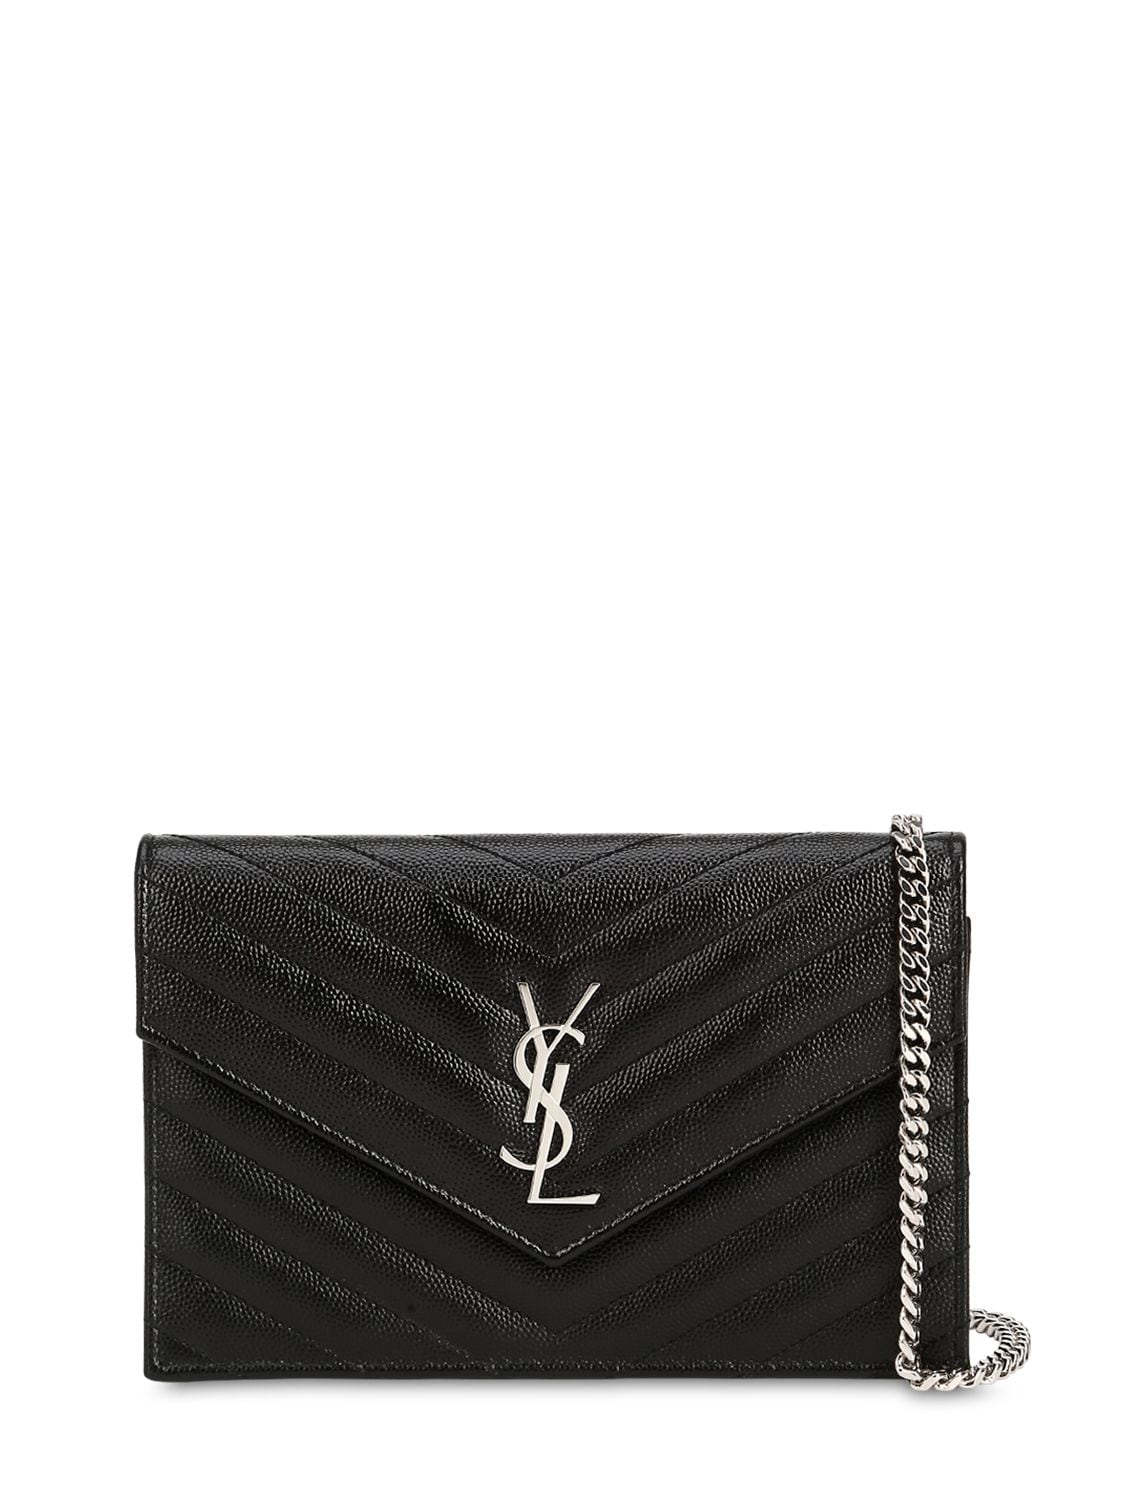 Saint Laurent Md Monogram Quilted Leather Bag In Black